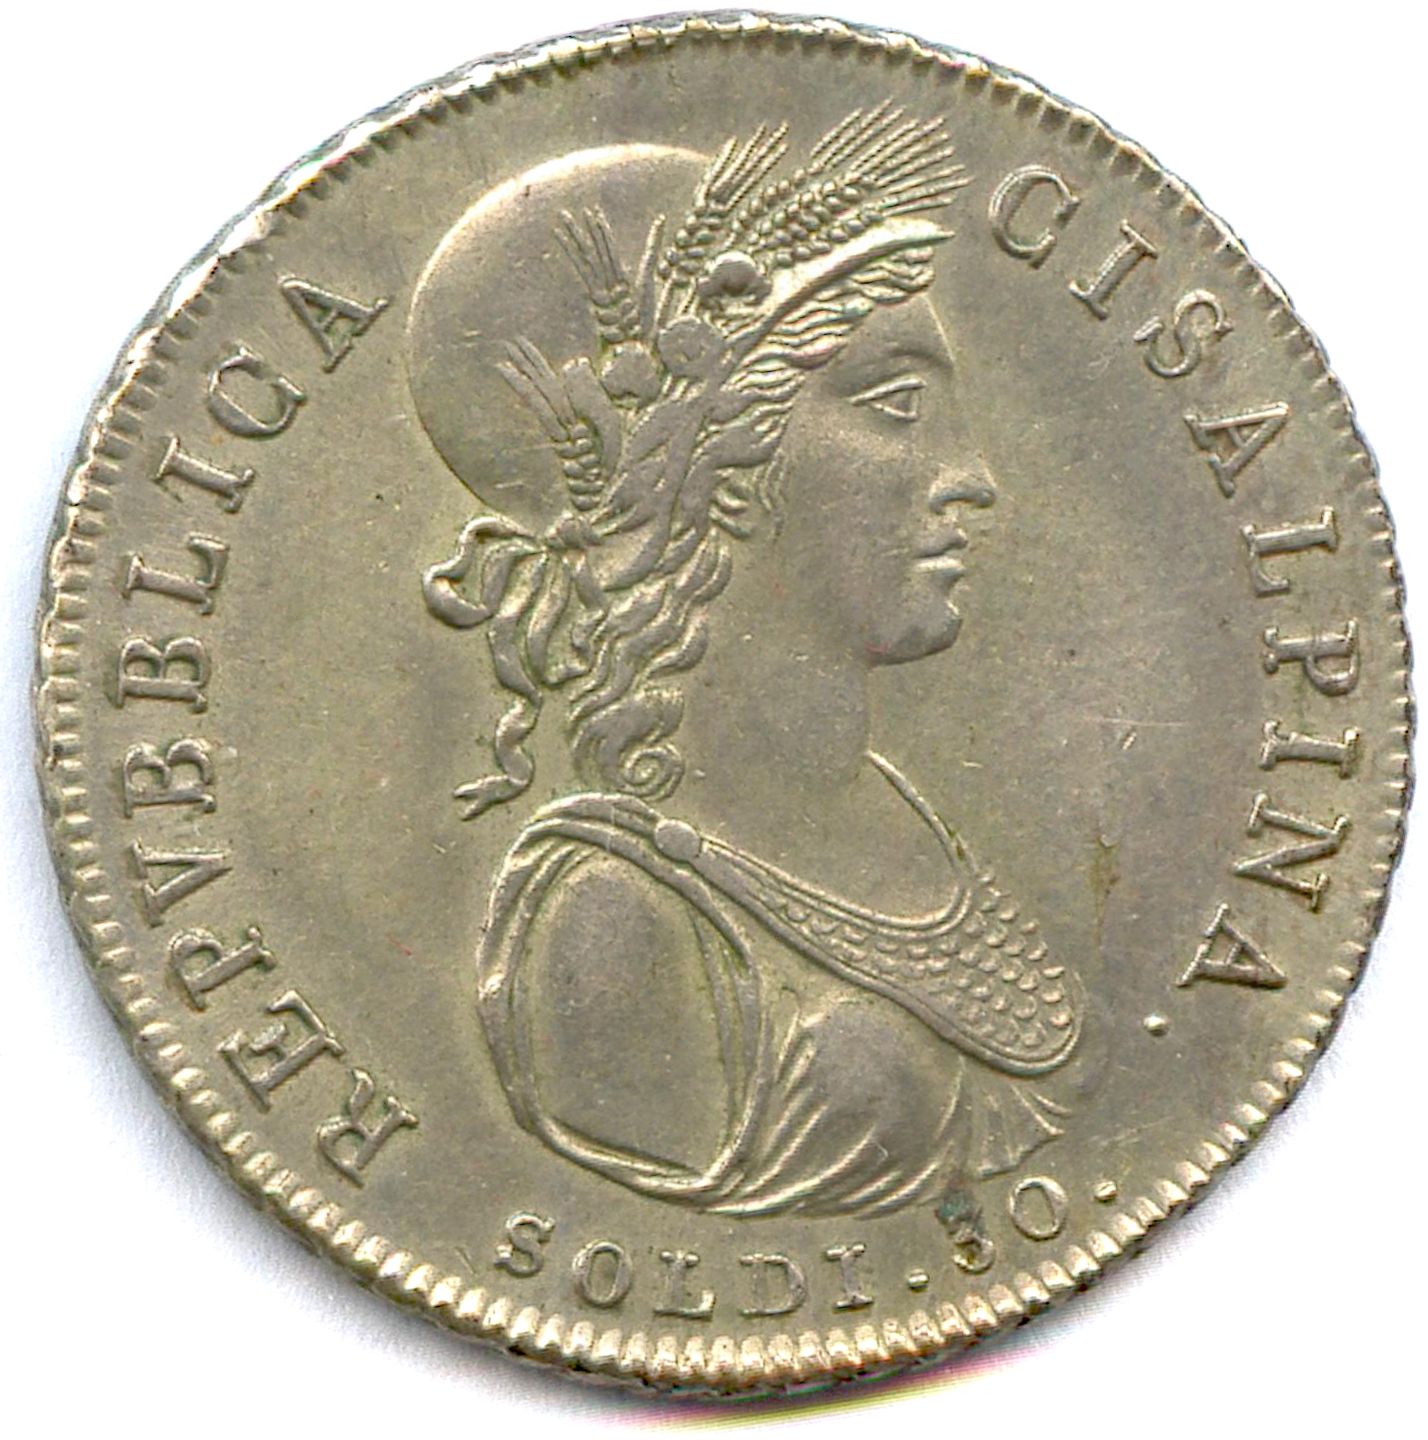 Null GAULE CISALPINE capo posto Milano 1800-1802

30 Soldi d'argento anno IX (18&hellip;